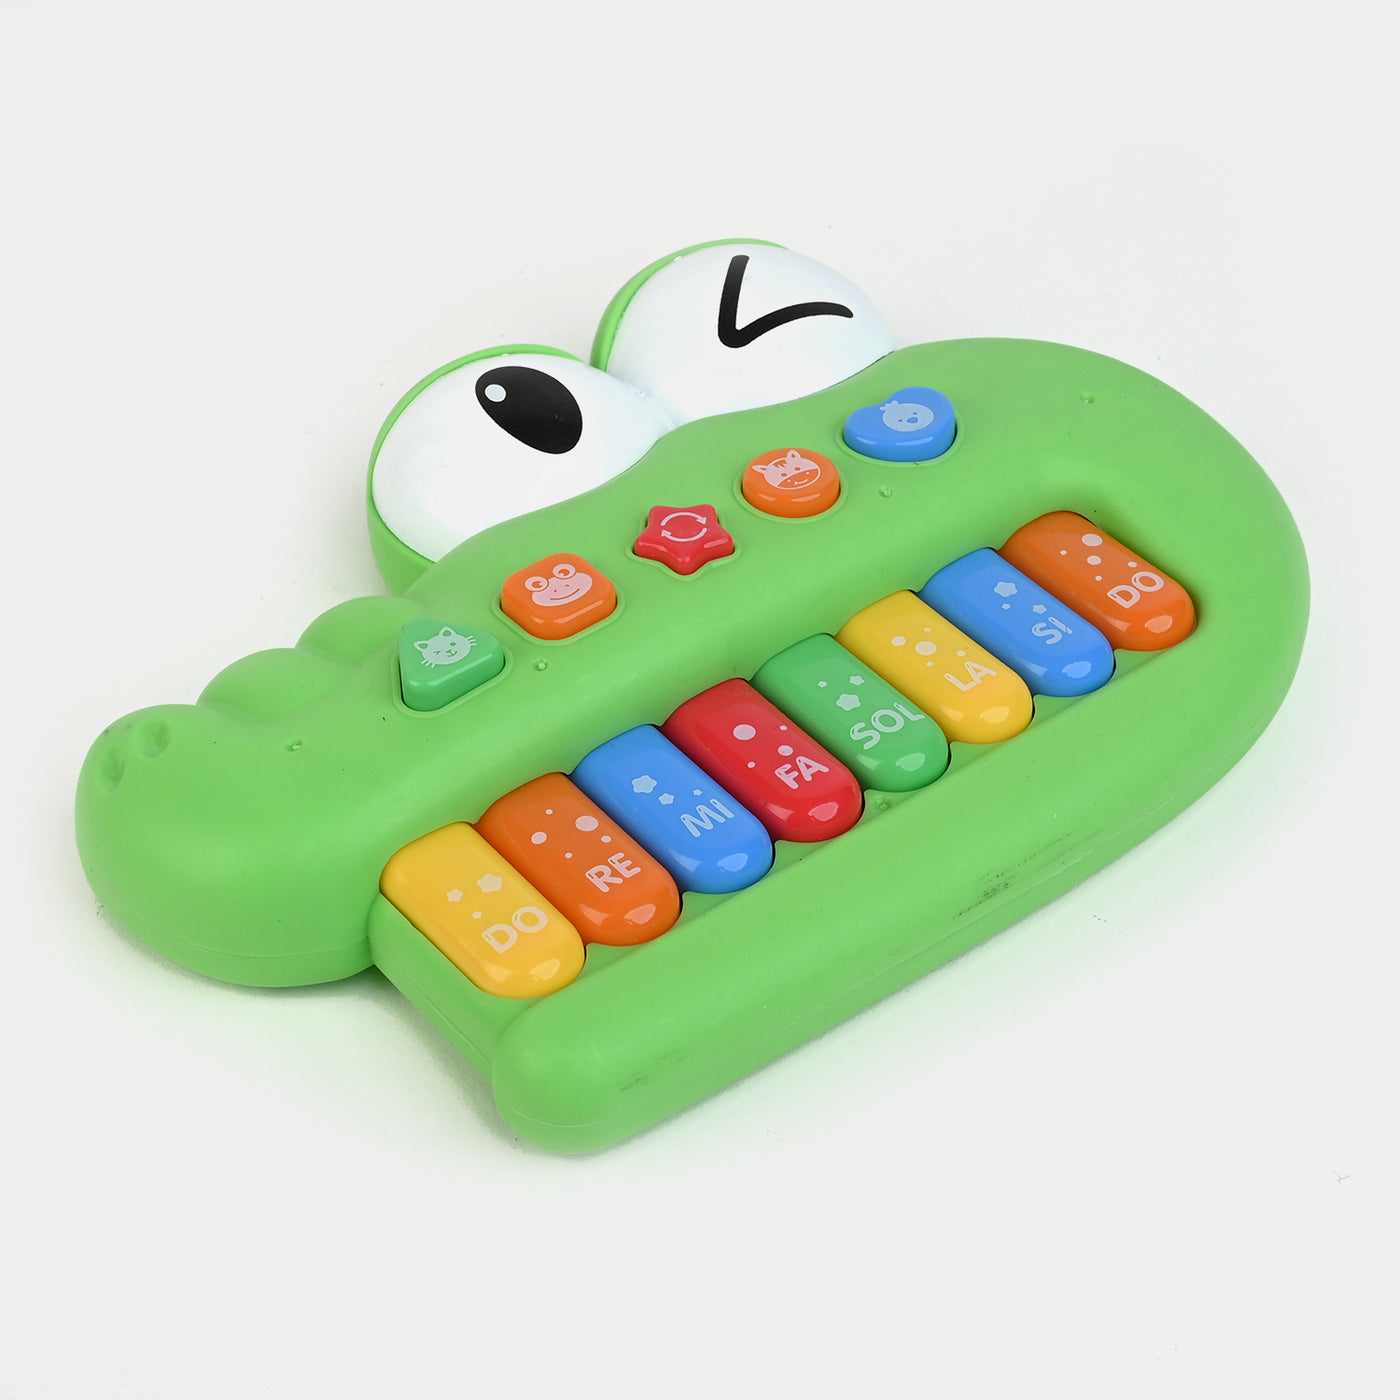 Crocodile Educational Musical Piano Toy